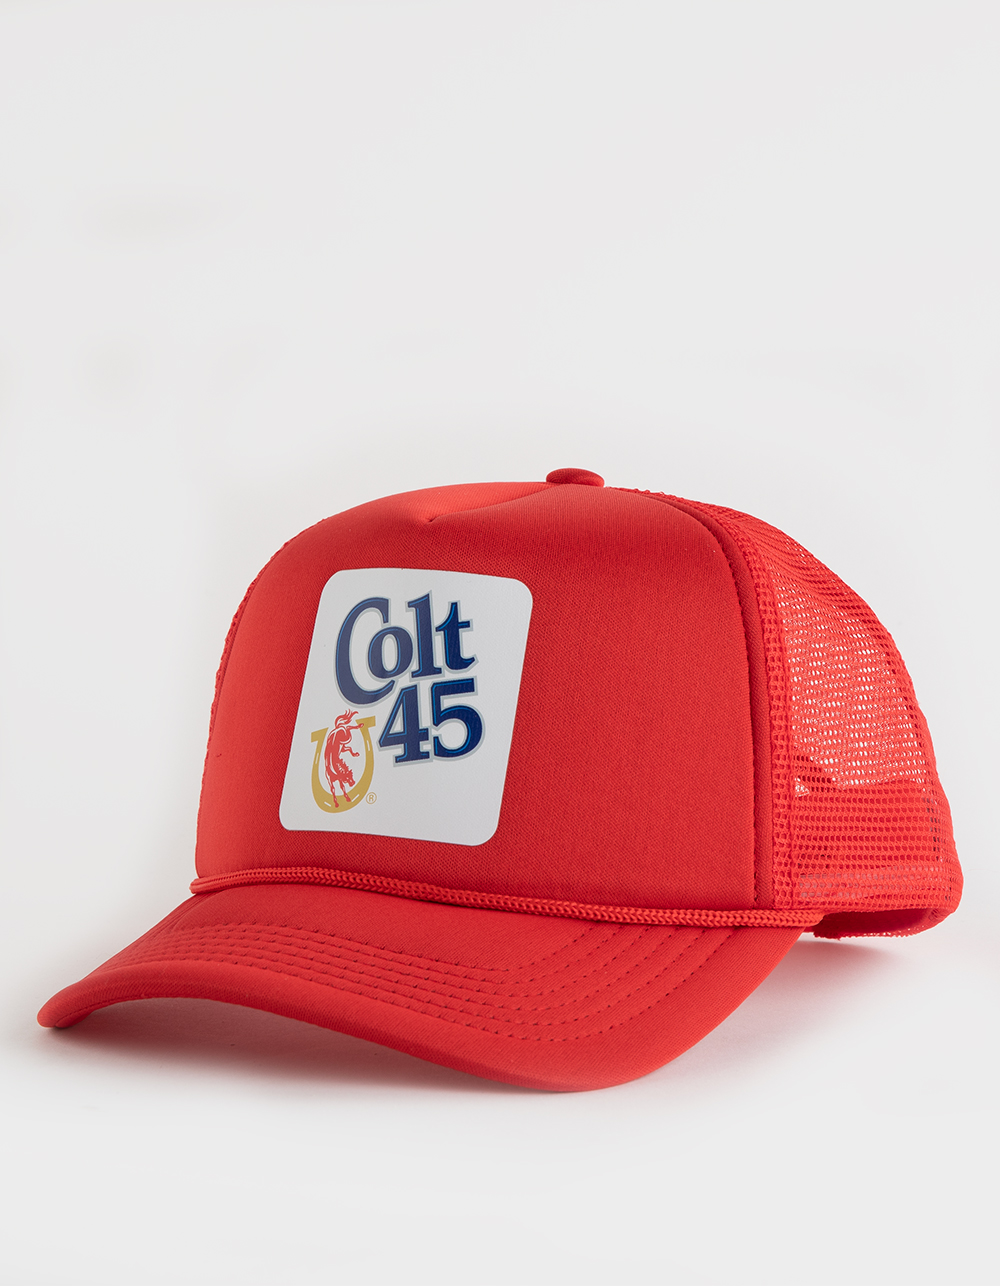 COLT 45 Mens Trucker Hat - RED | Tillys